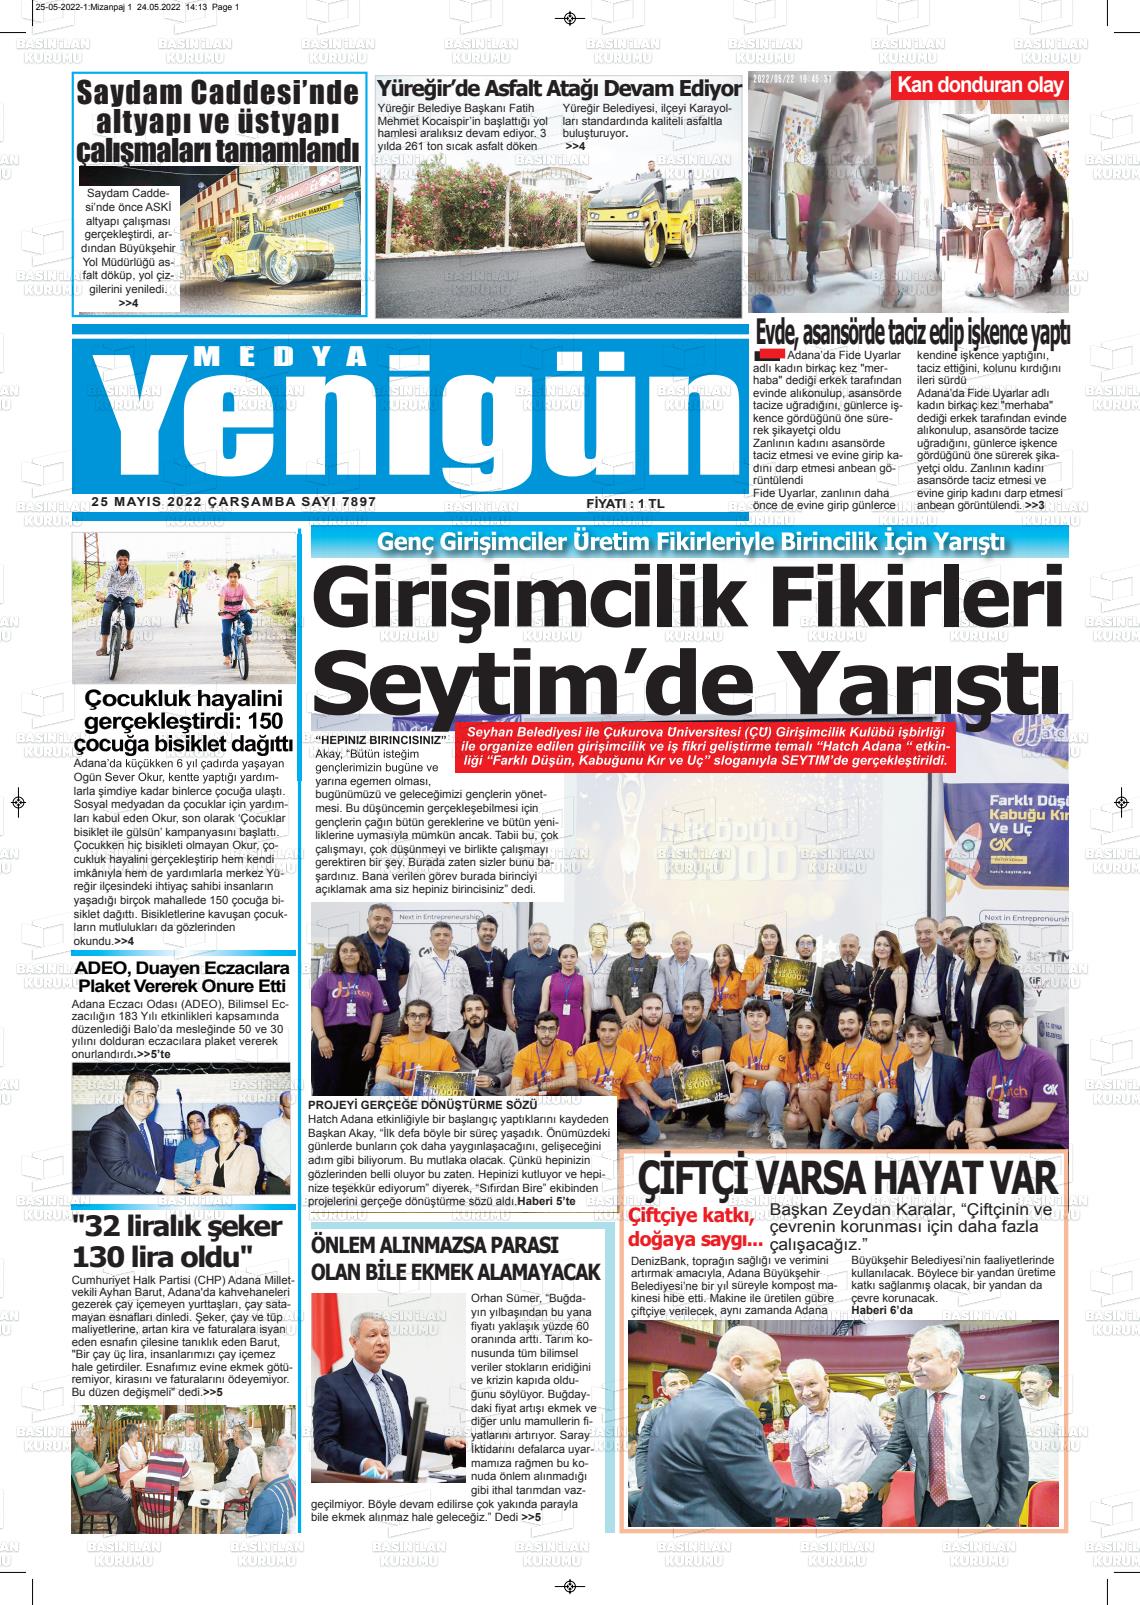 25 Mayıs 2022 Medya Yenigün Gazete Manşeti